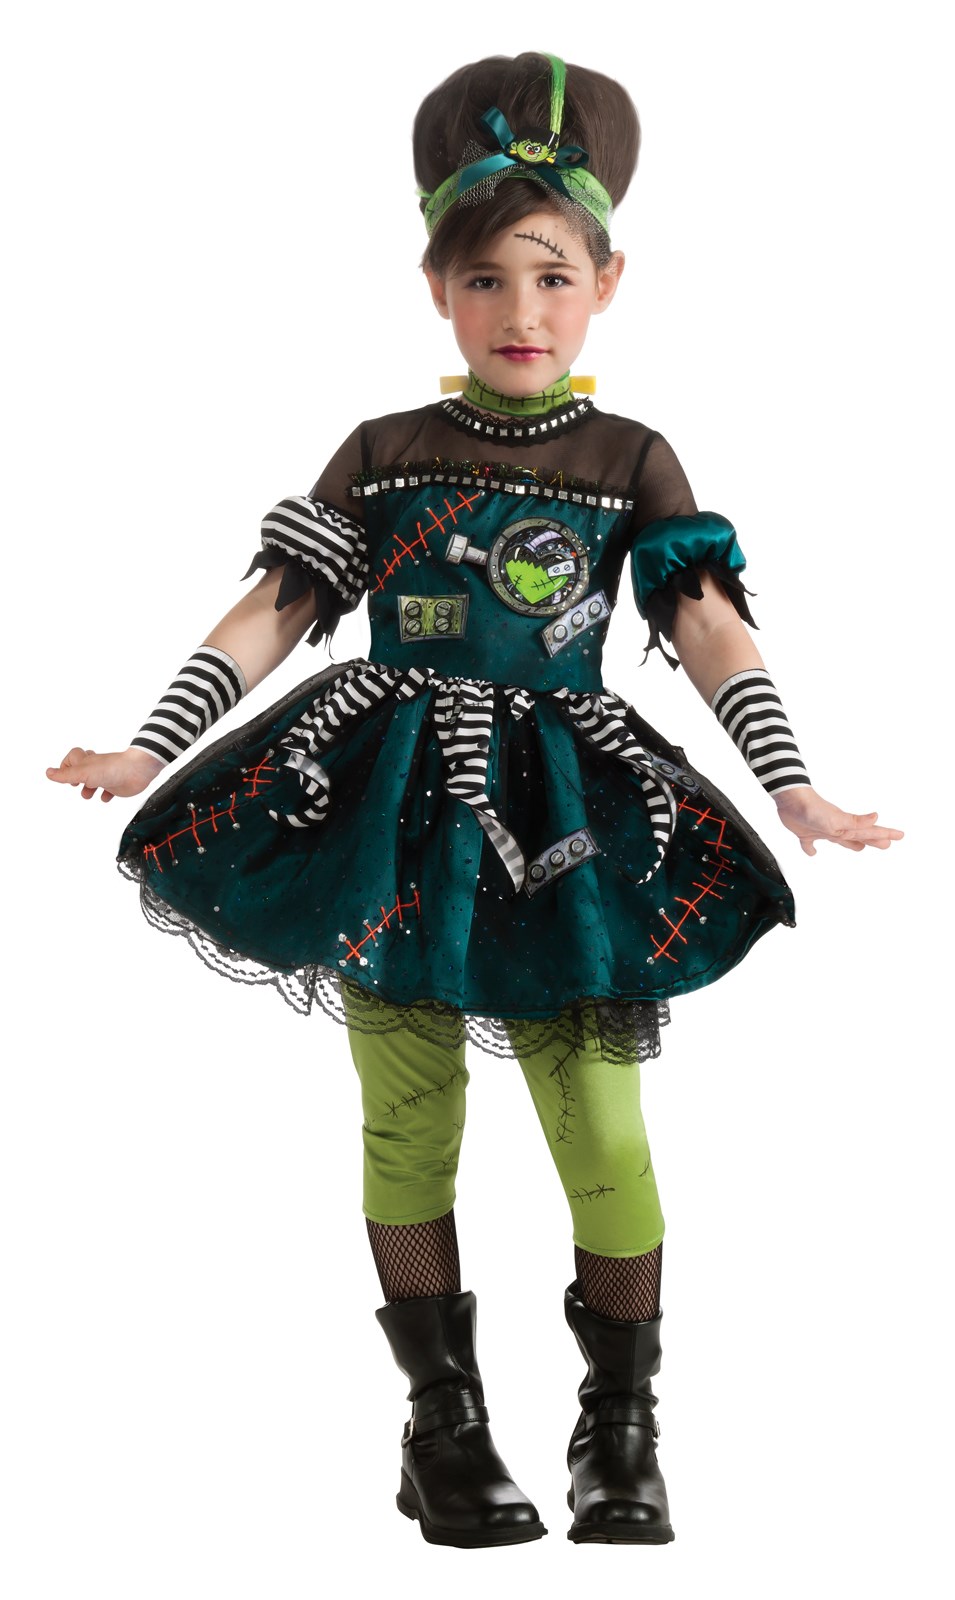 Frankies Princess Child Costume